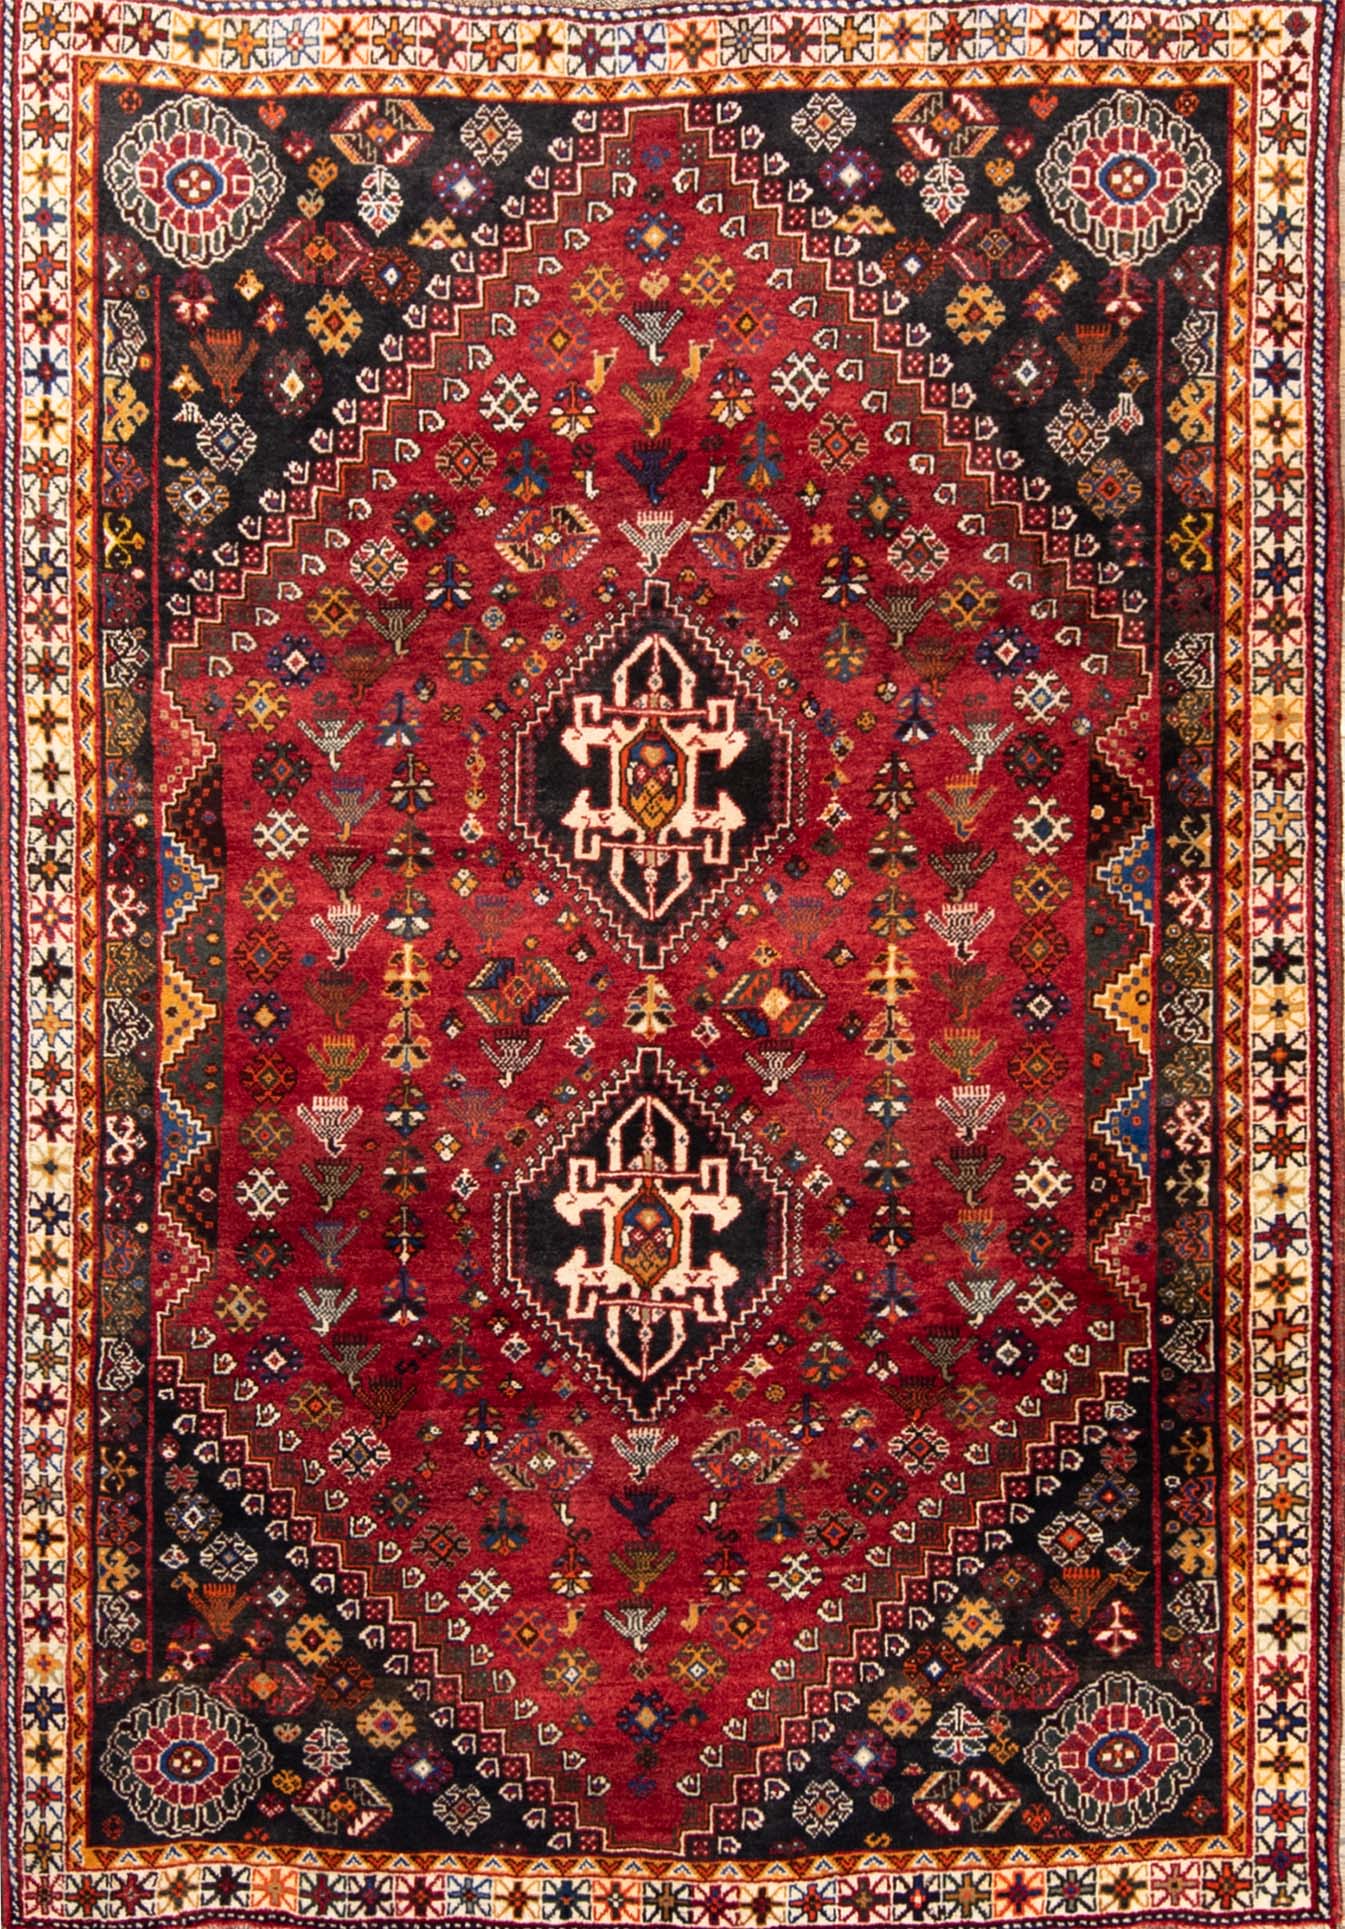 Handmade Persian red rug, geometric style Persian Shiraz wool rug. Size 5.7x8.5.